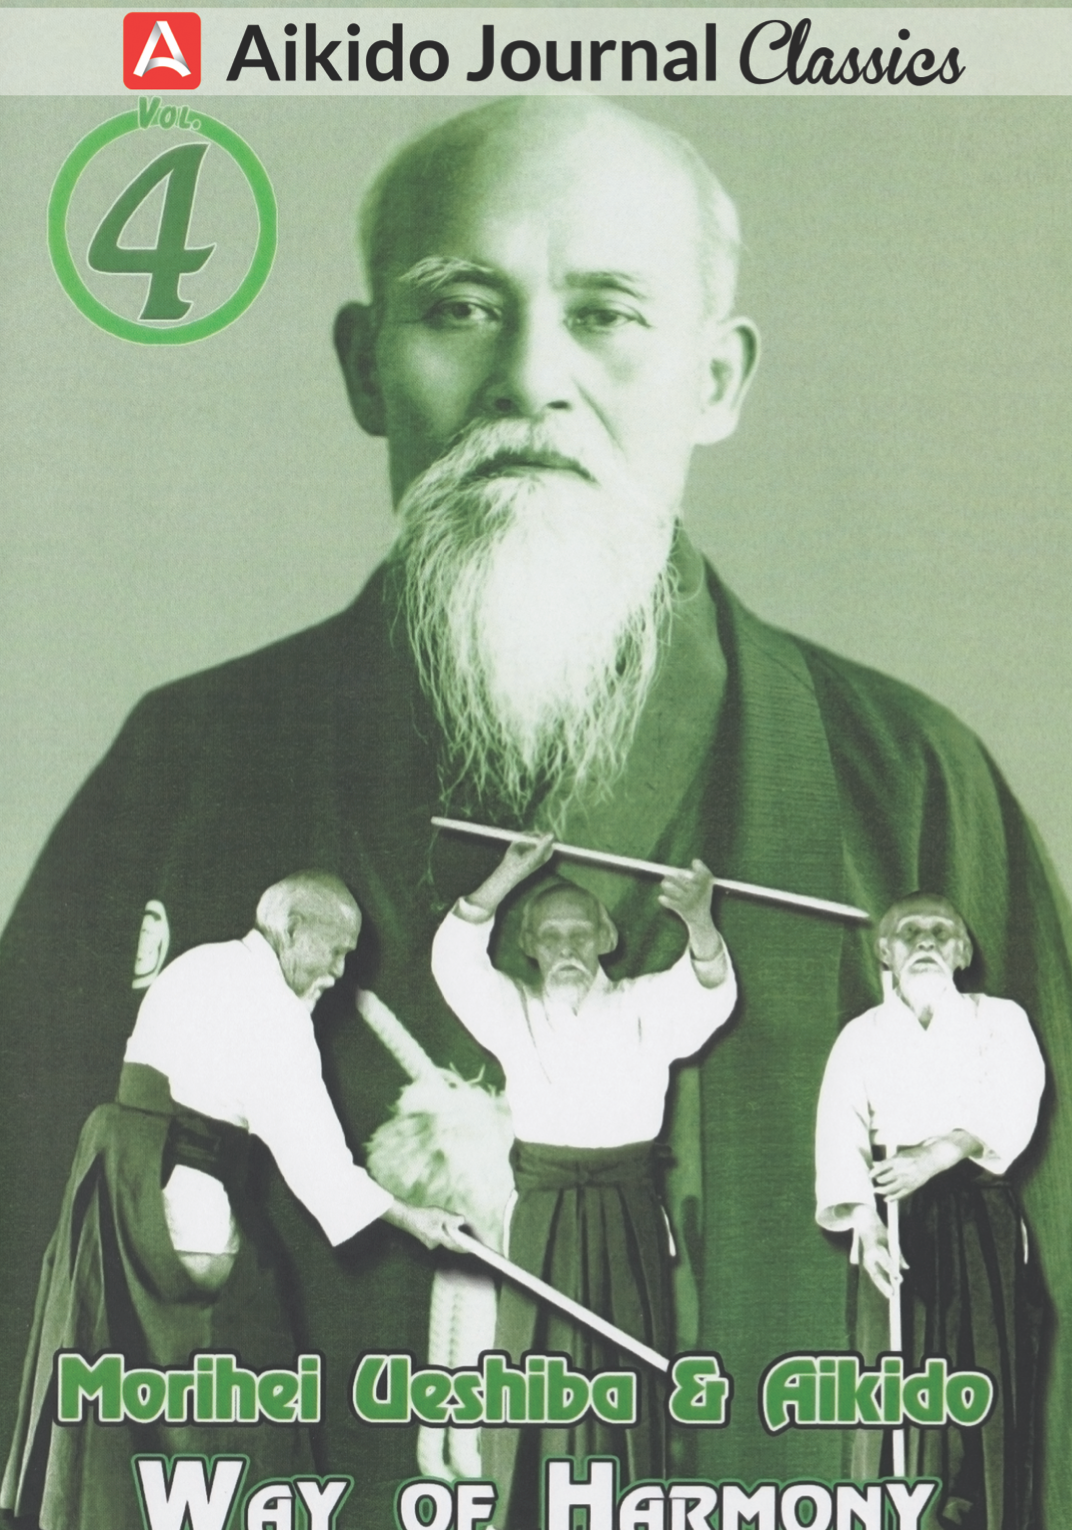 Morihei Ueshiba & Aikido 4: Way of Harmony DVD